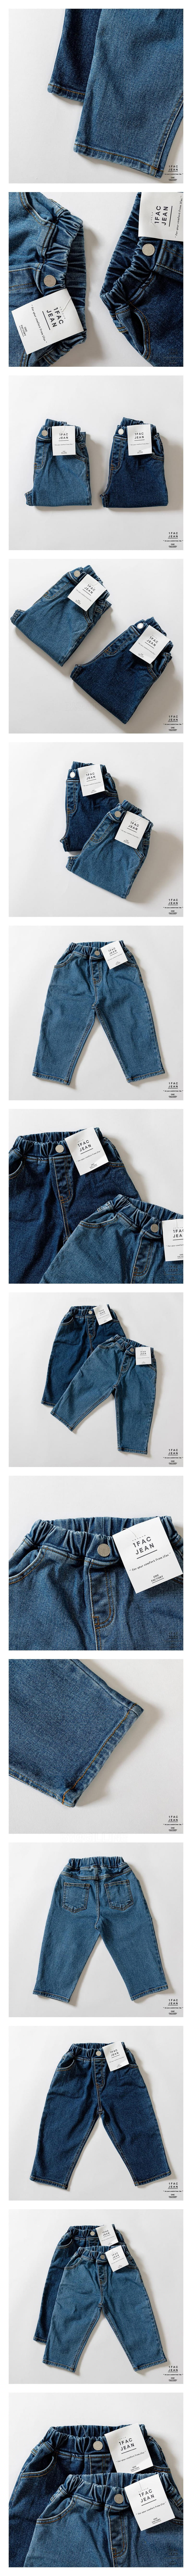 1 Fac - Korean Children Fashion - #todddlerfashion - Tapered Real Jeans